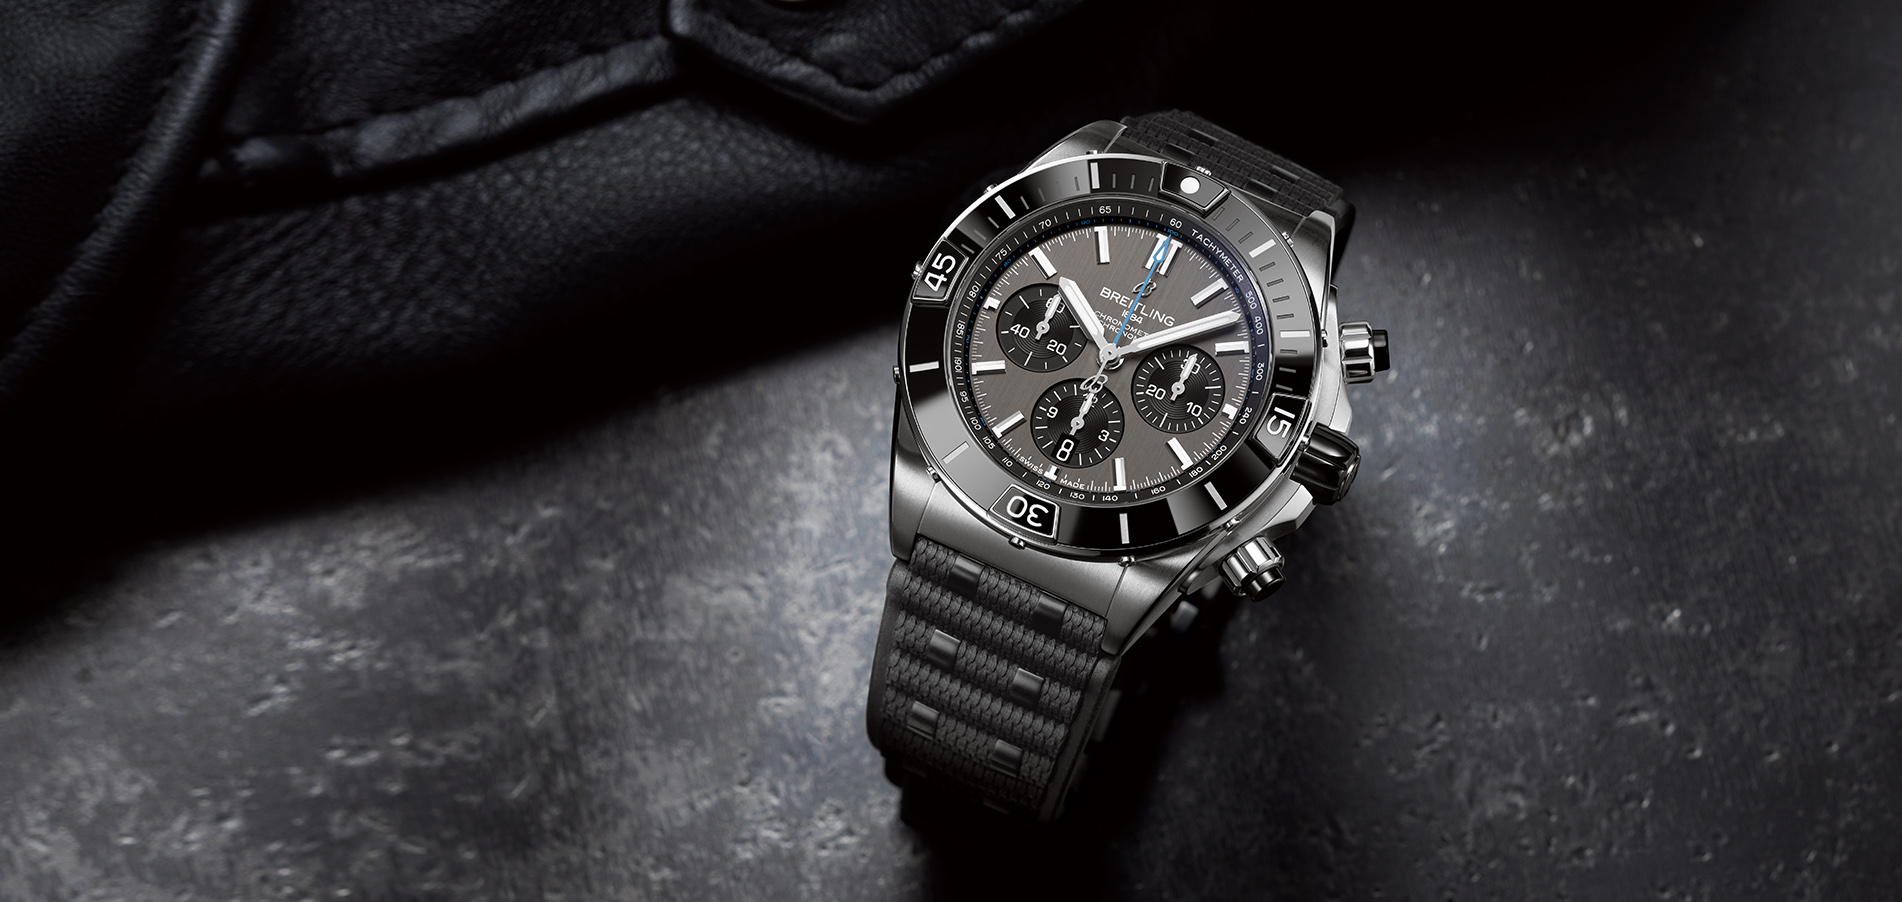 The new Breitling Chronomat Titanium